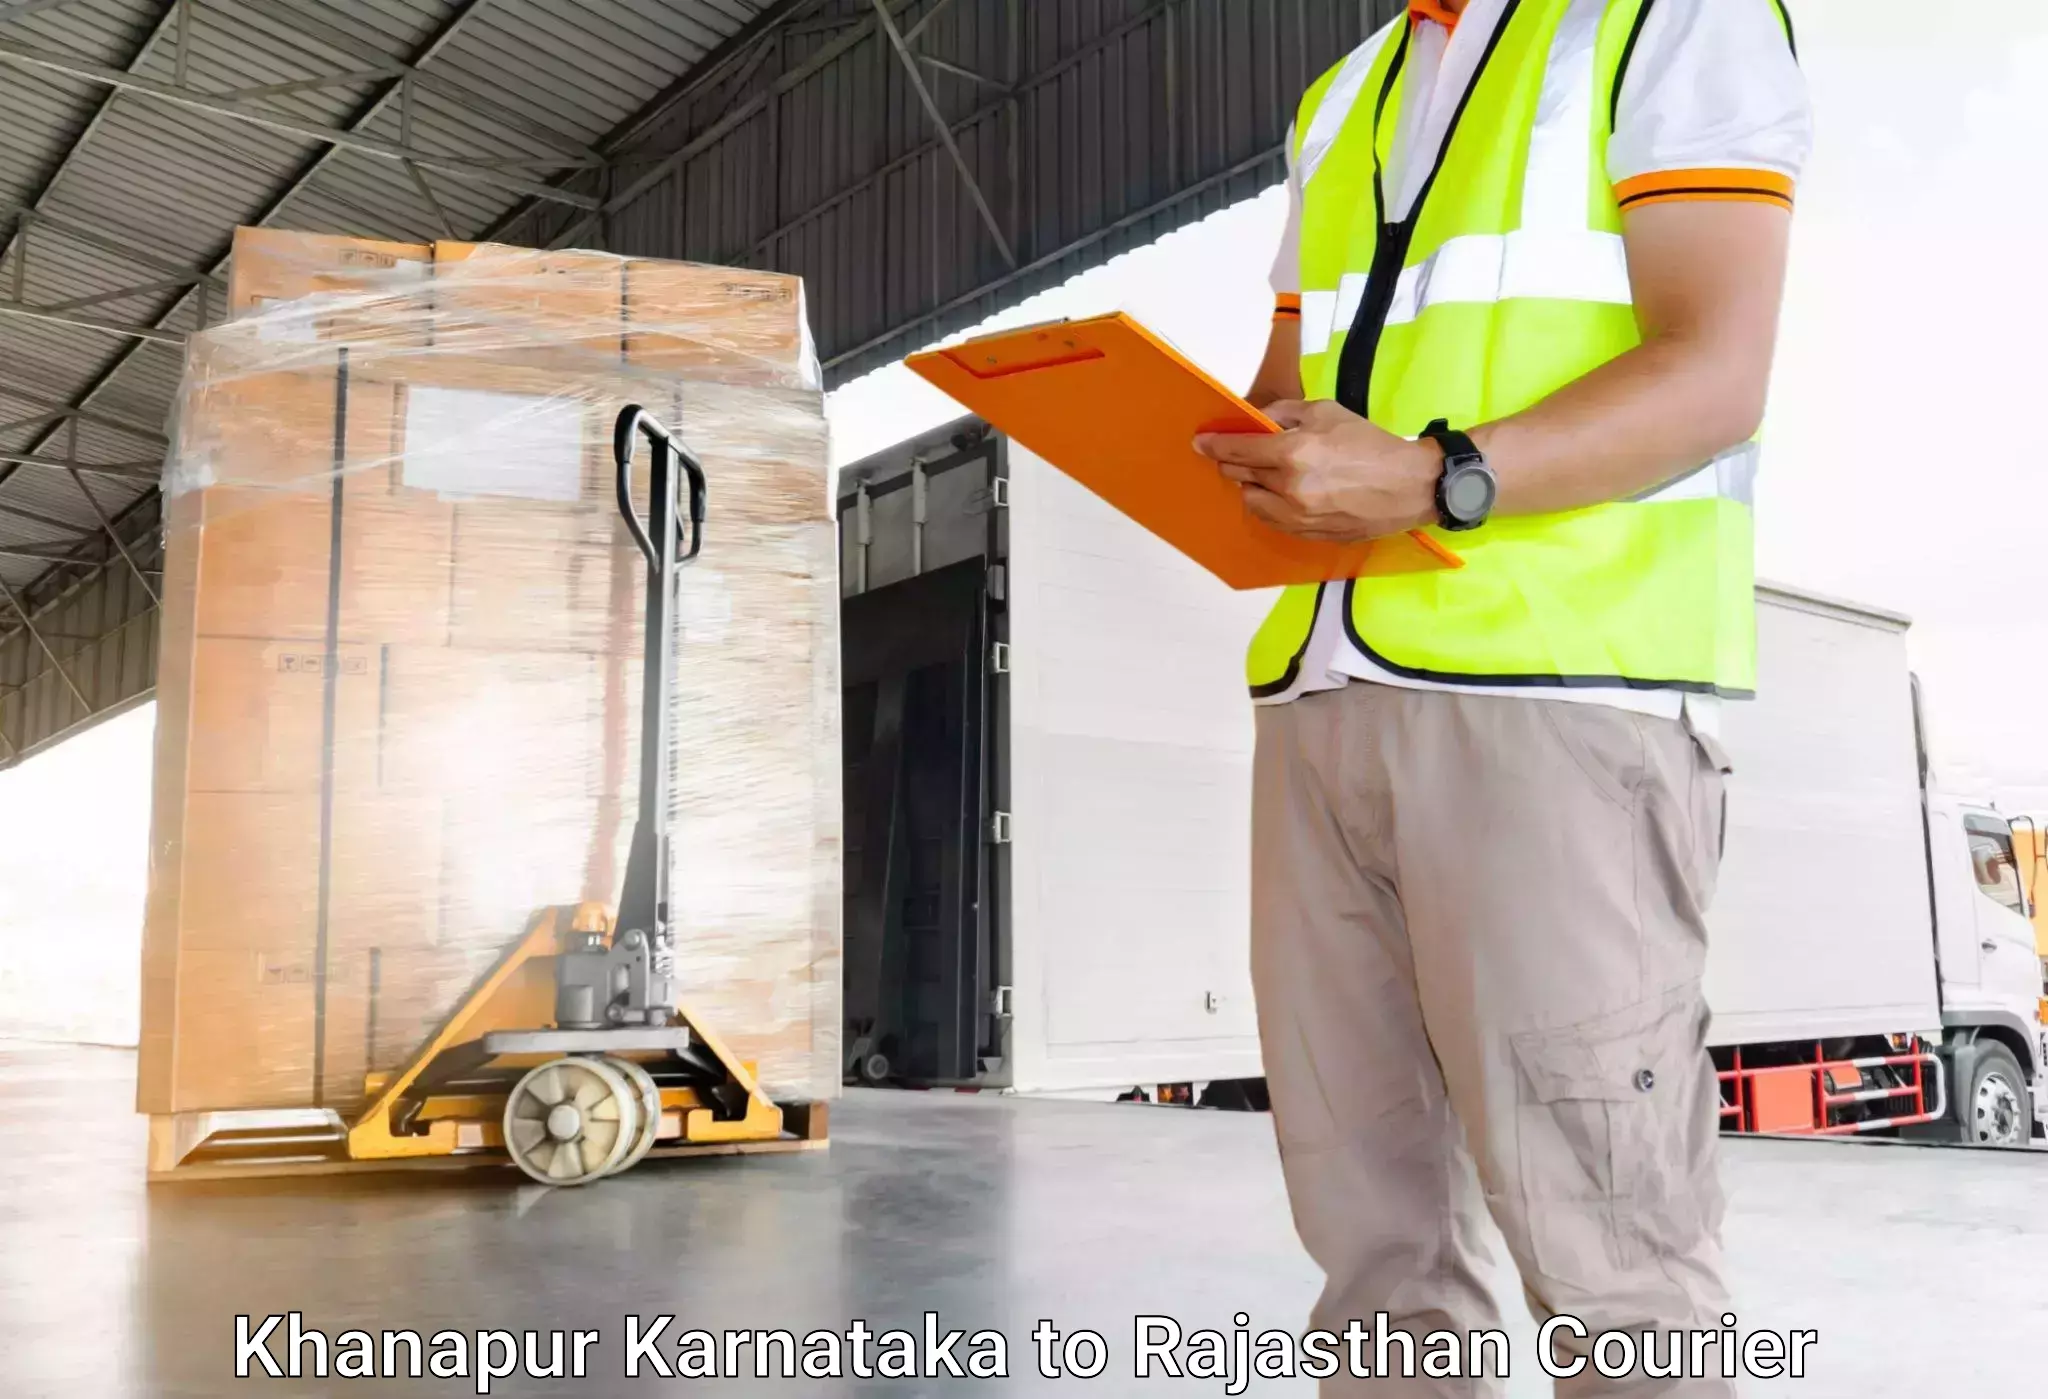 Luggage shipment tracking Khanapur Karnataka to Nainwa